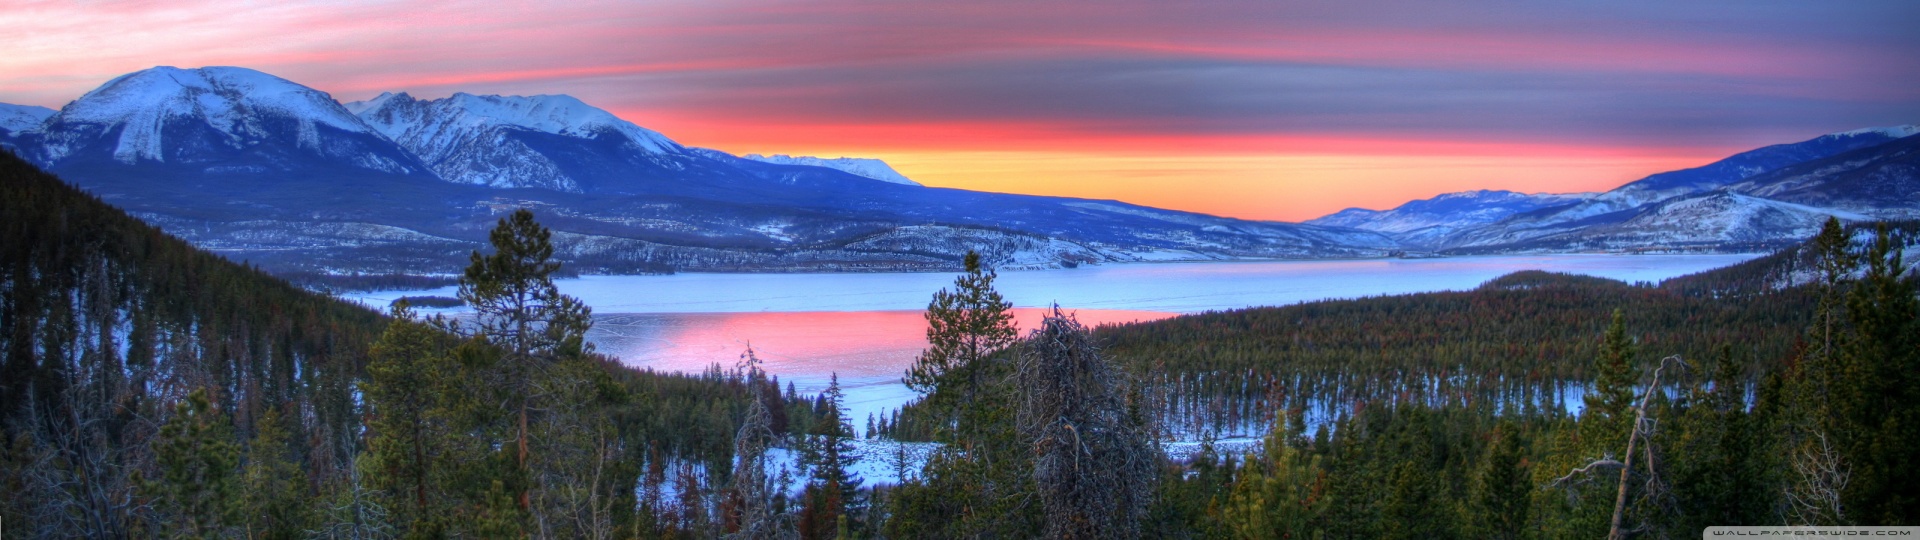 Mountain Lake Sunset Nature HD desktop wallpaper : Widescreen ...